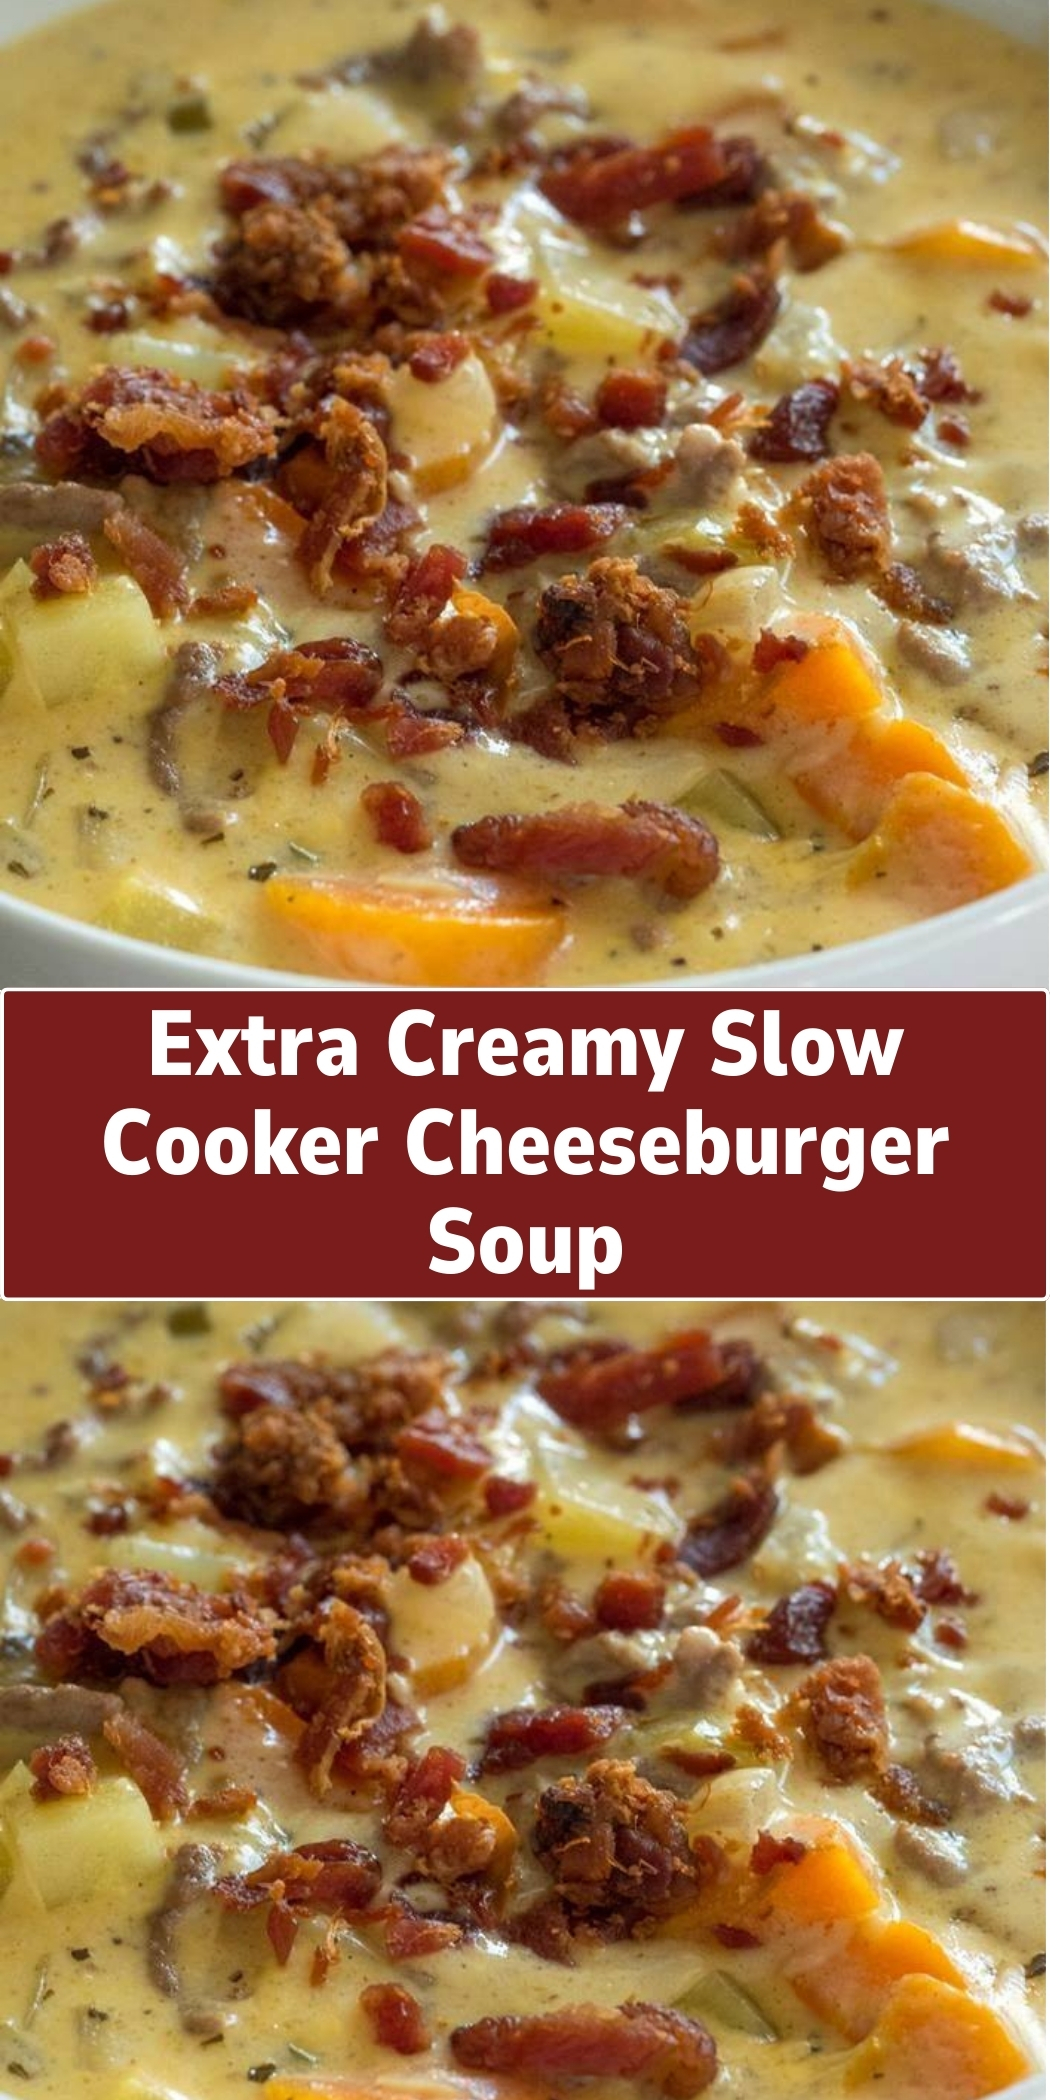 Extra Creamy Slow Cooker Cheeseburger Soup